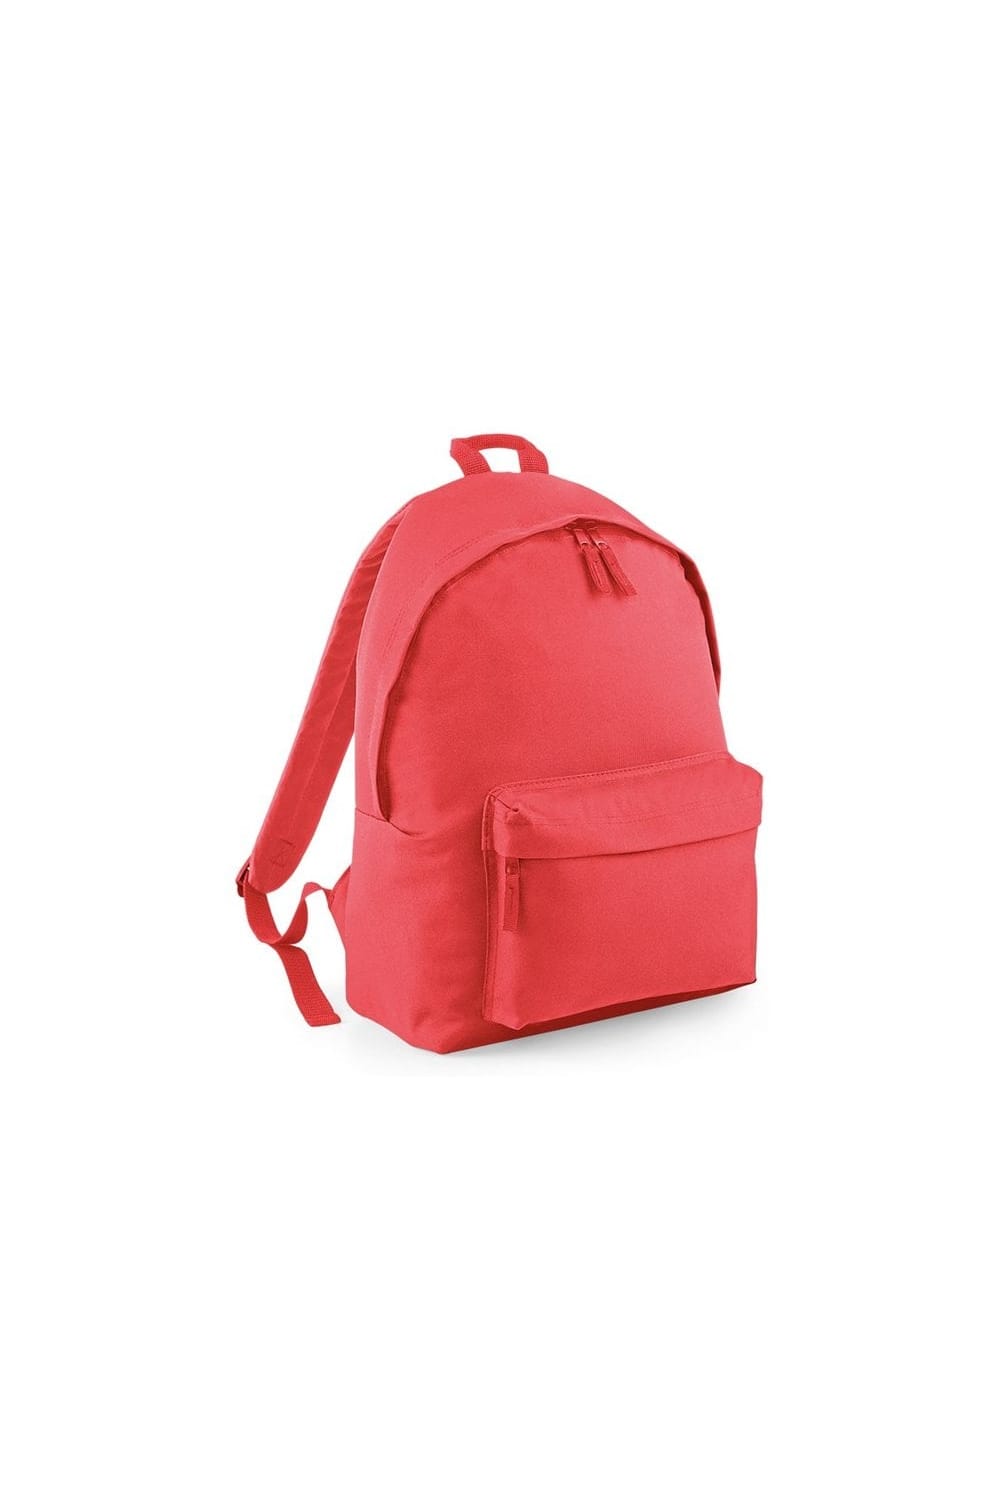 Bagbase Original Fashion Backpack (Coral) (One Size)